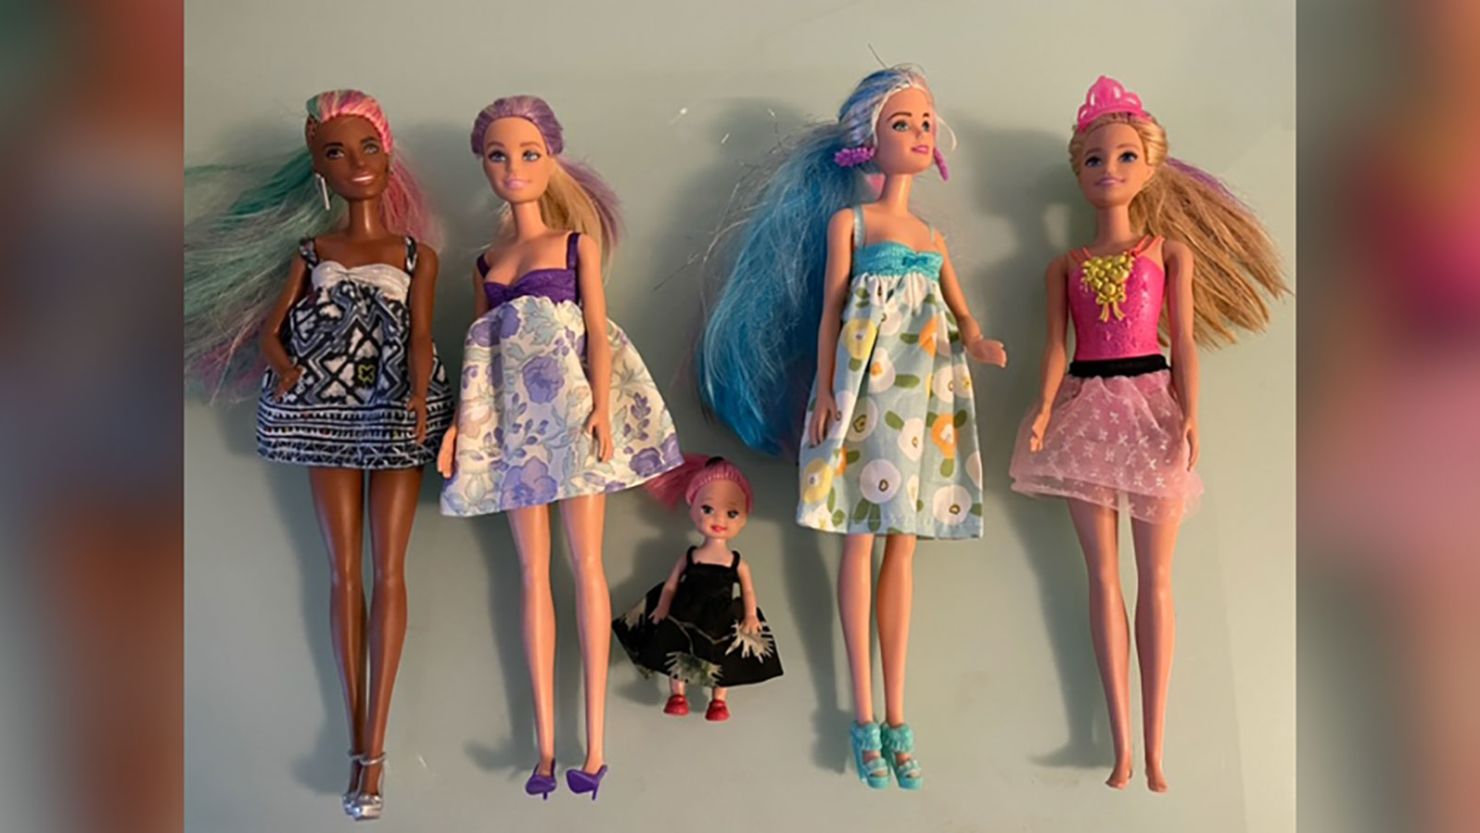 Buy Barbie Made to Move Doll Orange Dye Pants